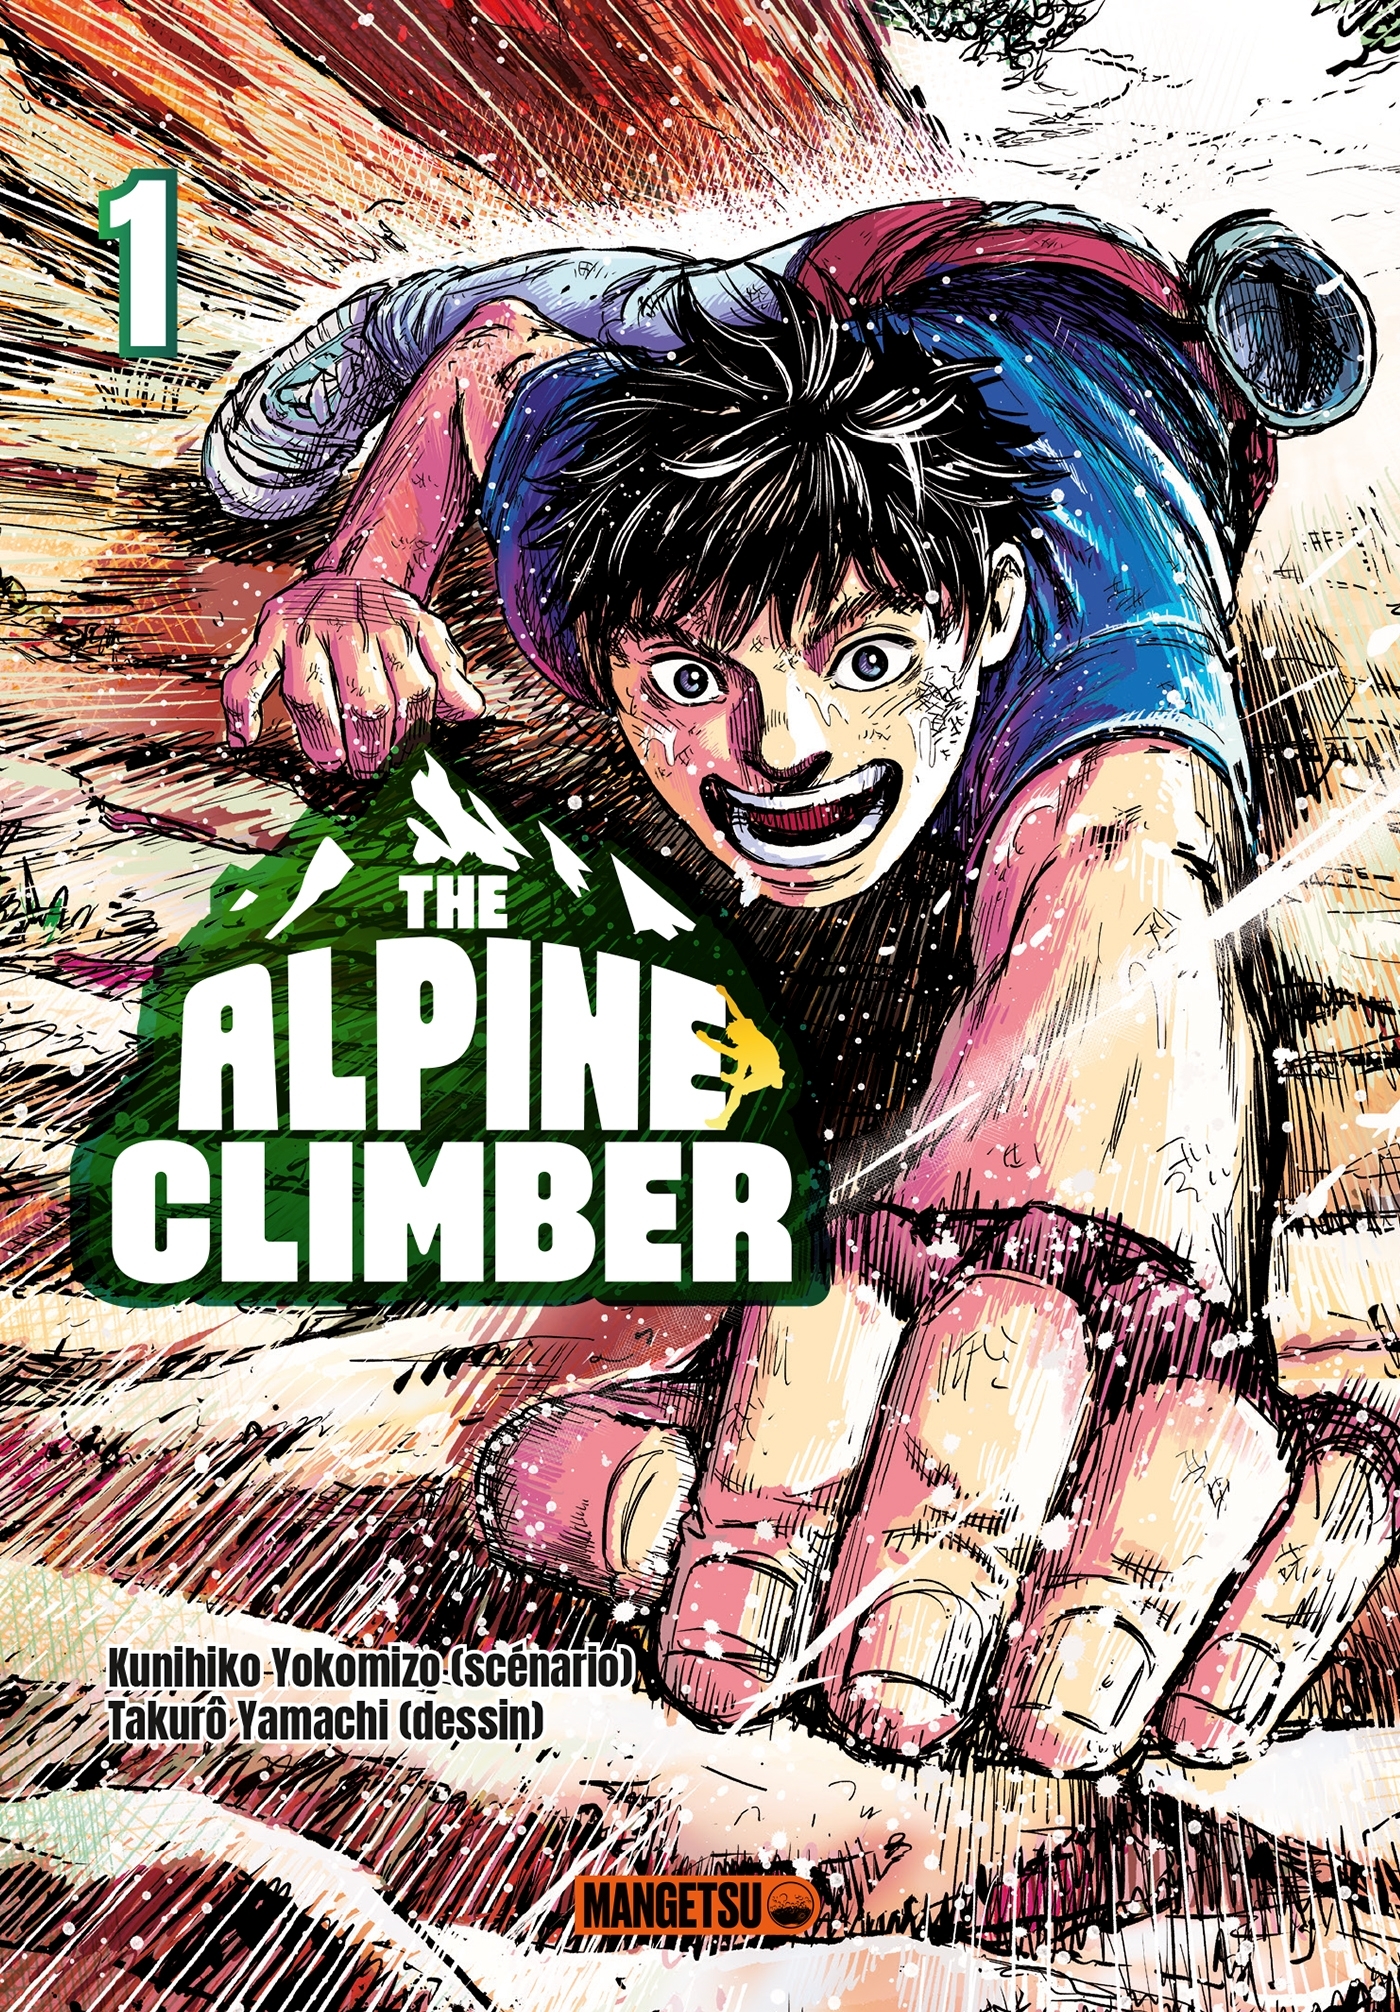 The Alpine Climber